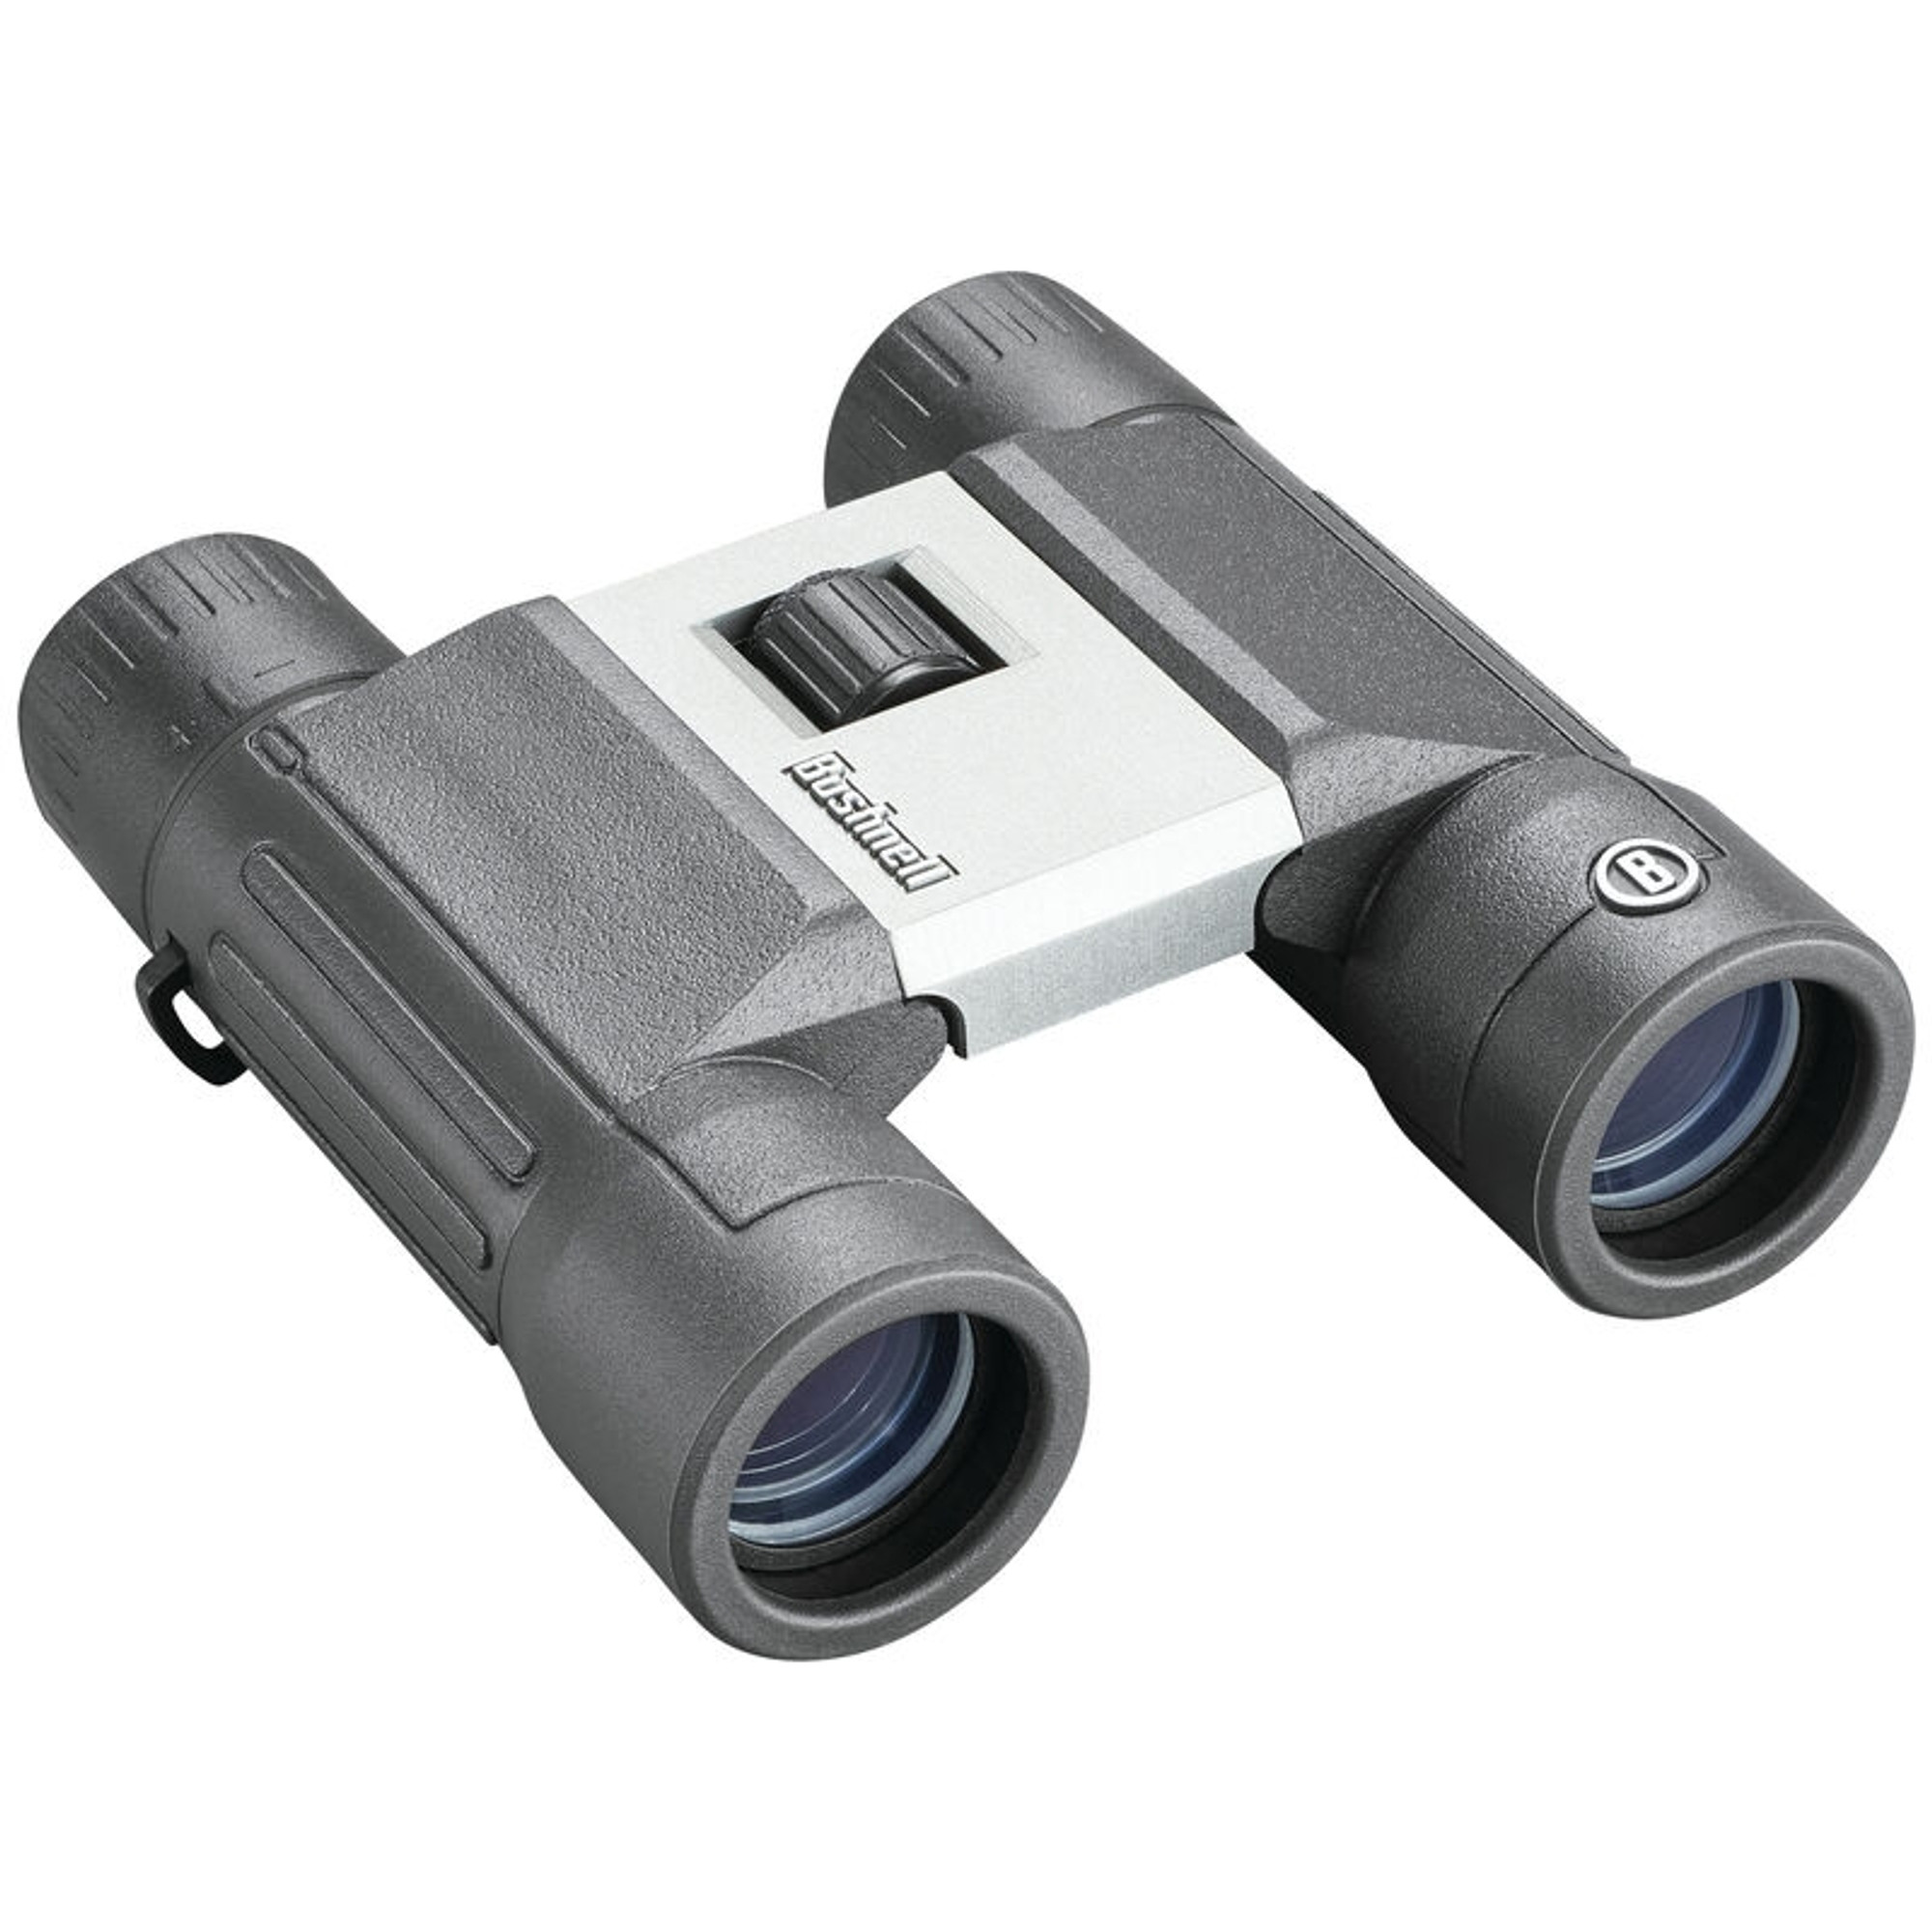 Powerview 2.0 10X25MM Binoculars